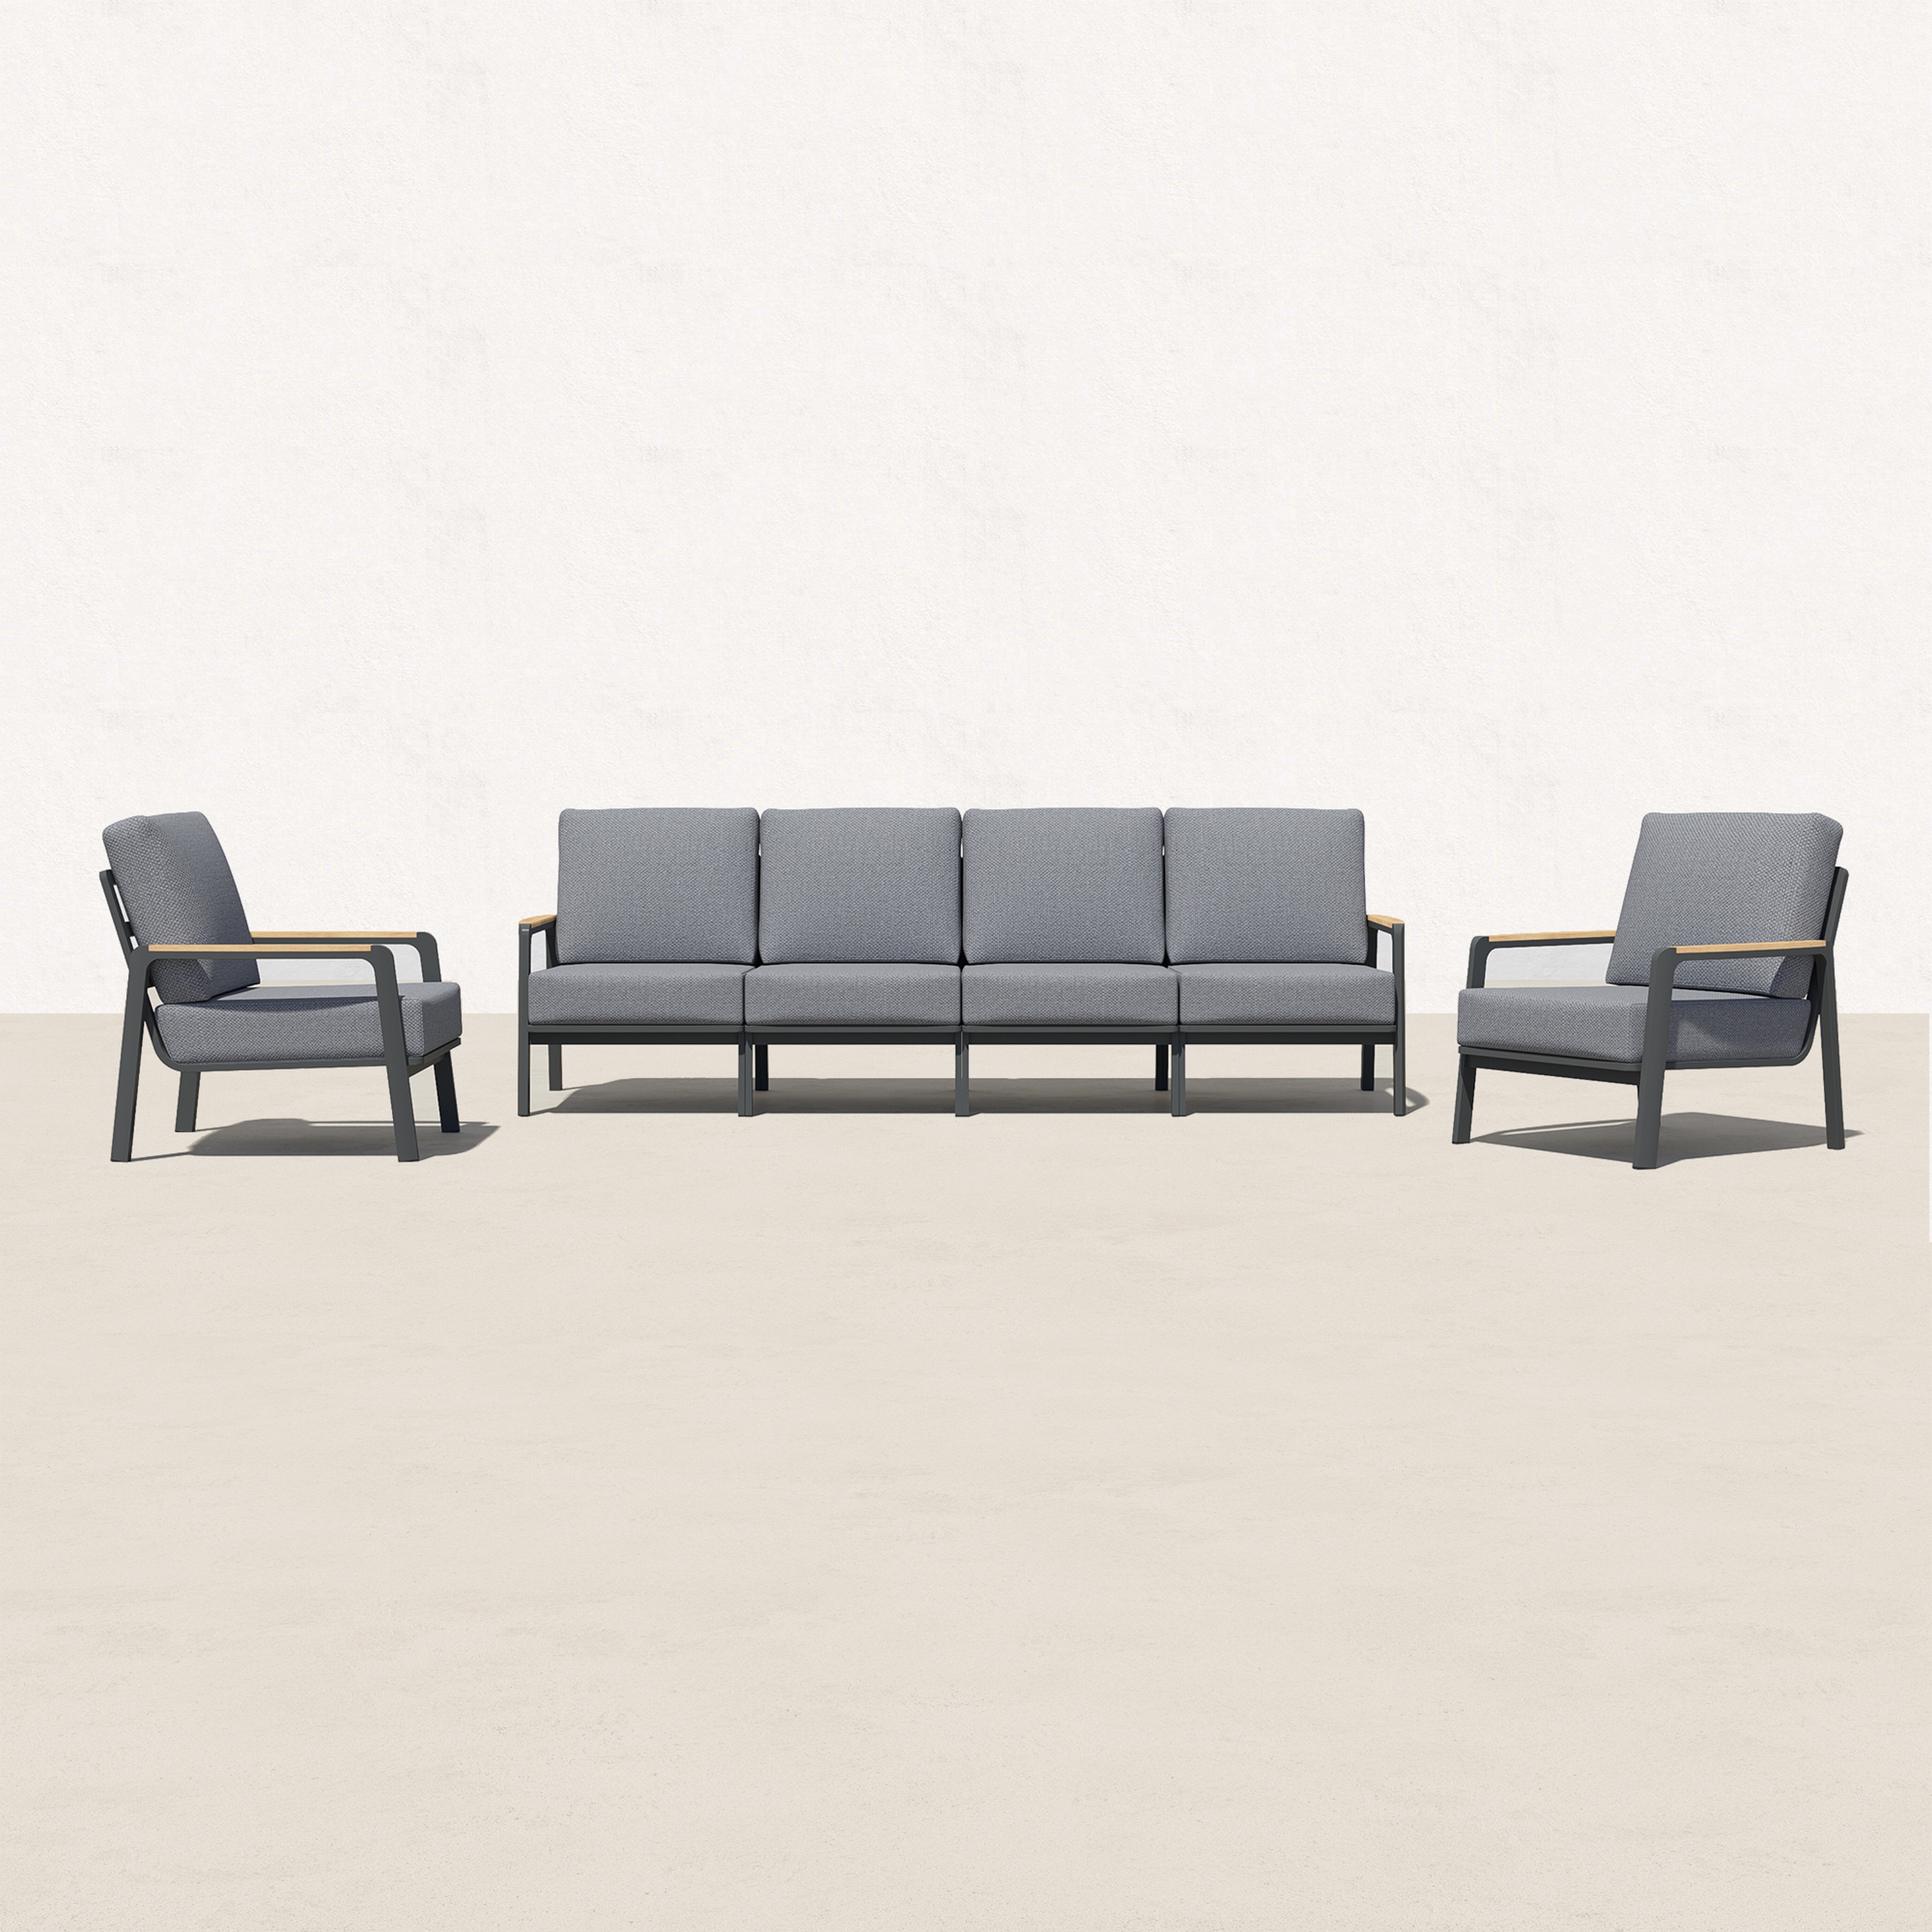 Orion Teak Outdoor Sofa with Armchairs - 6 Seat-Baeryon Furniture